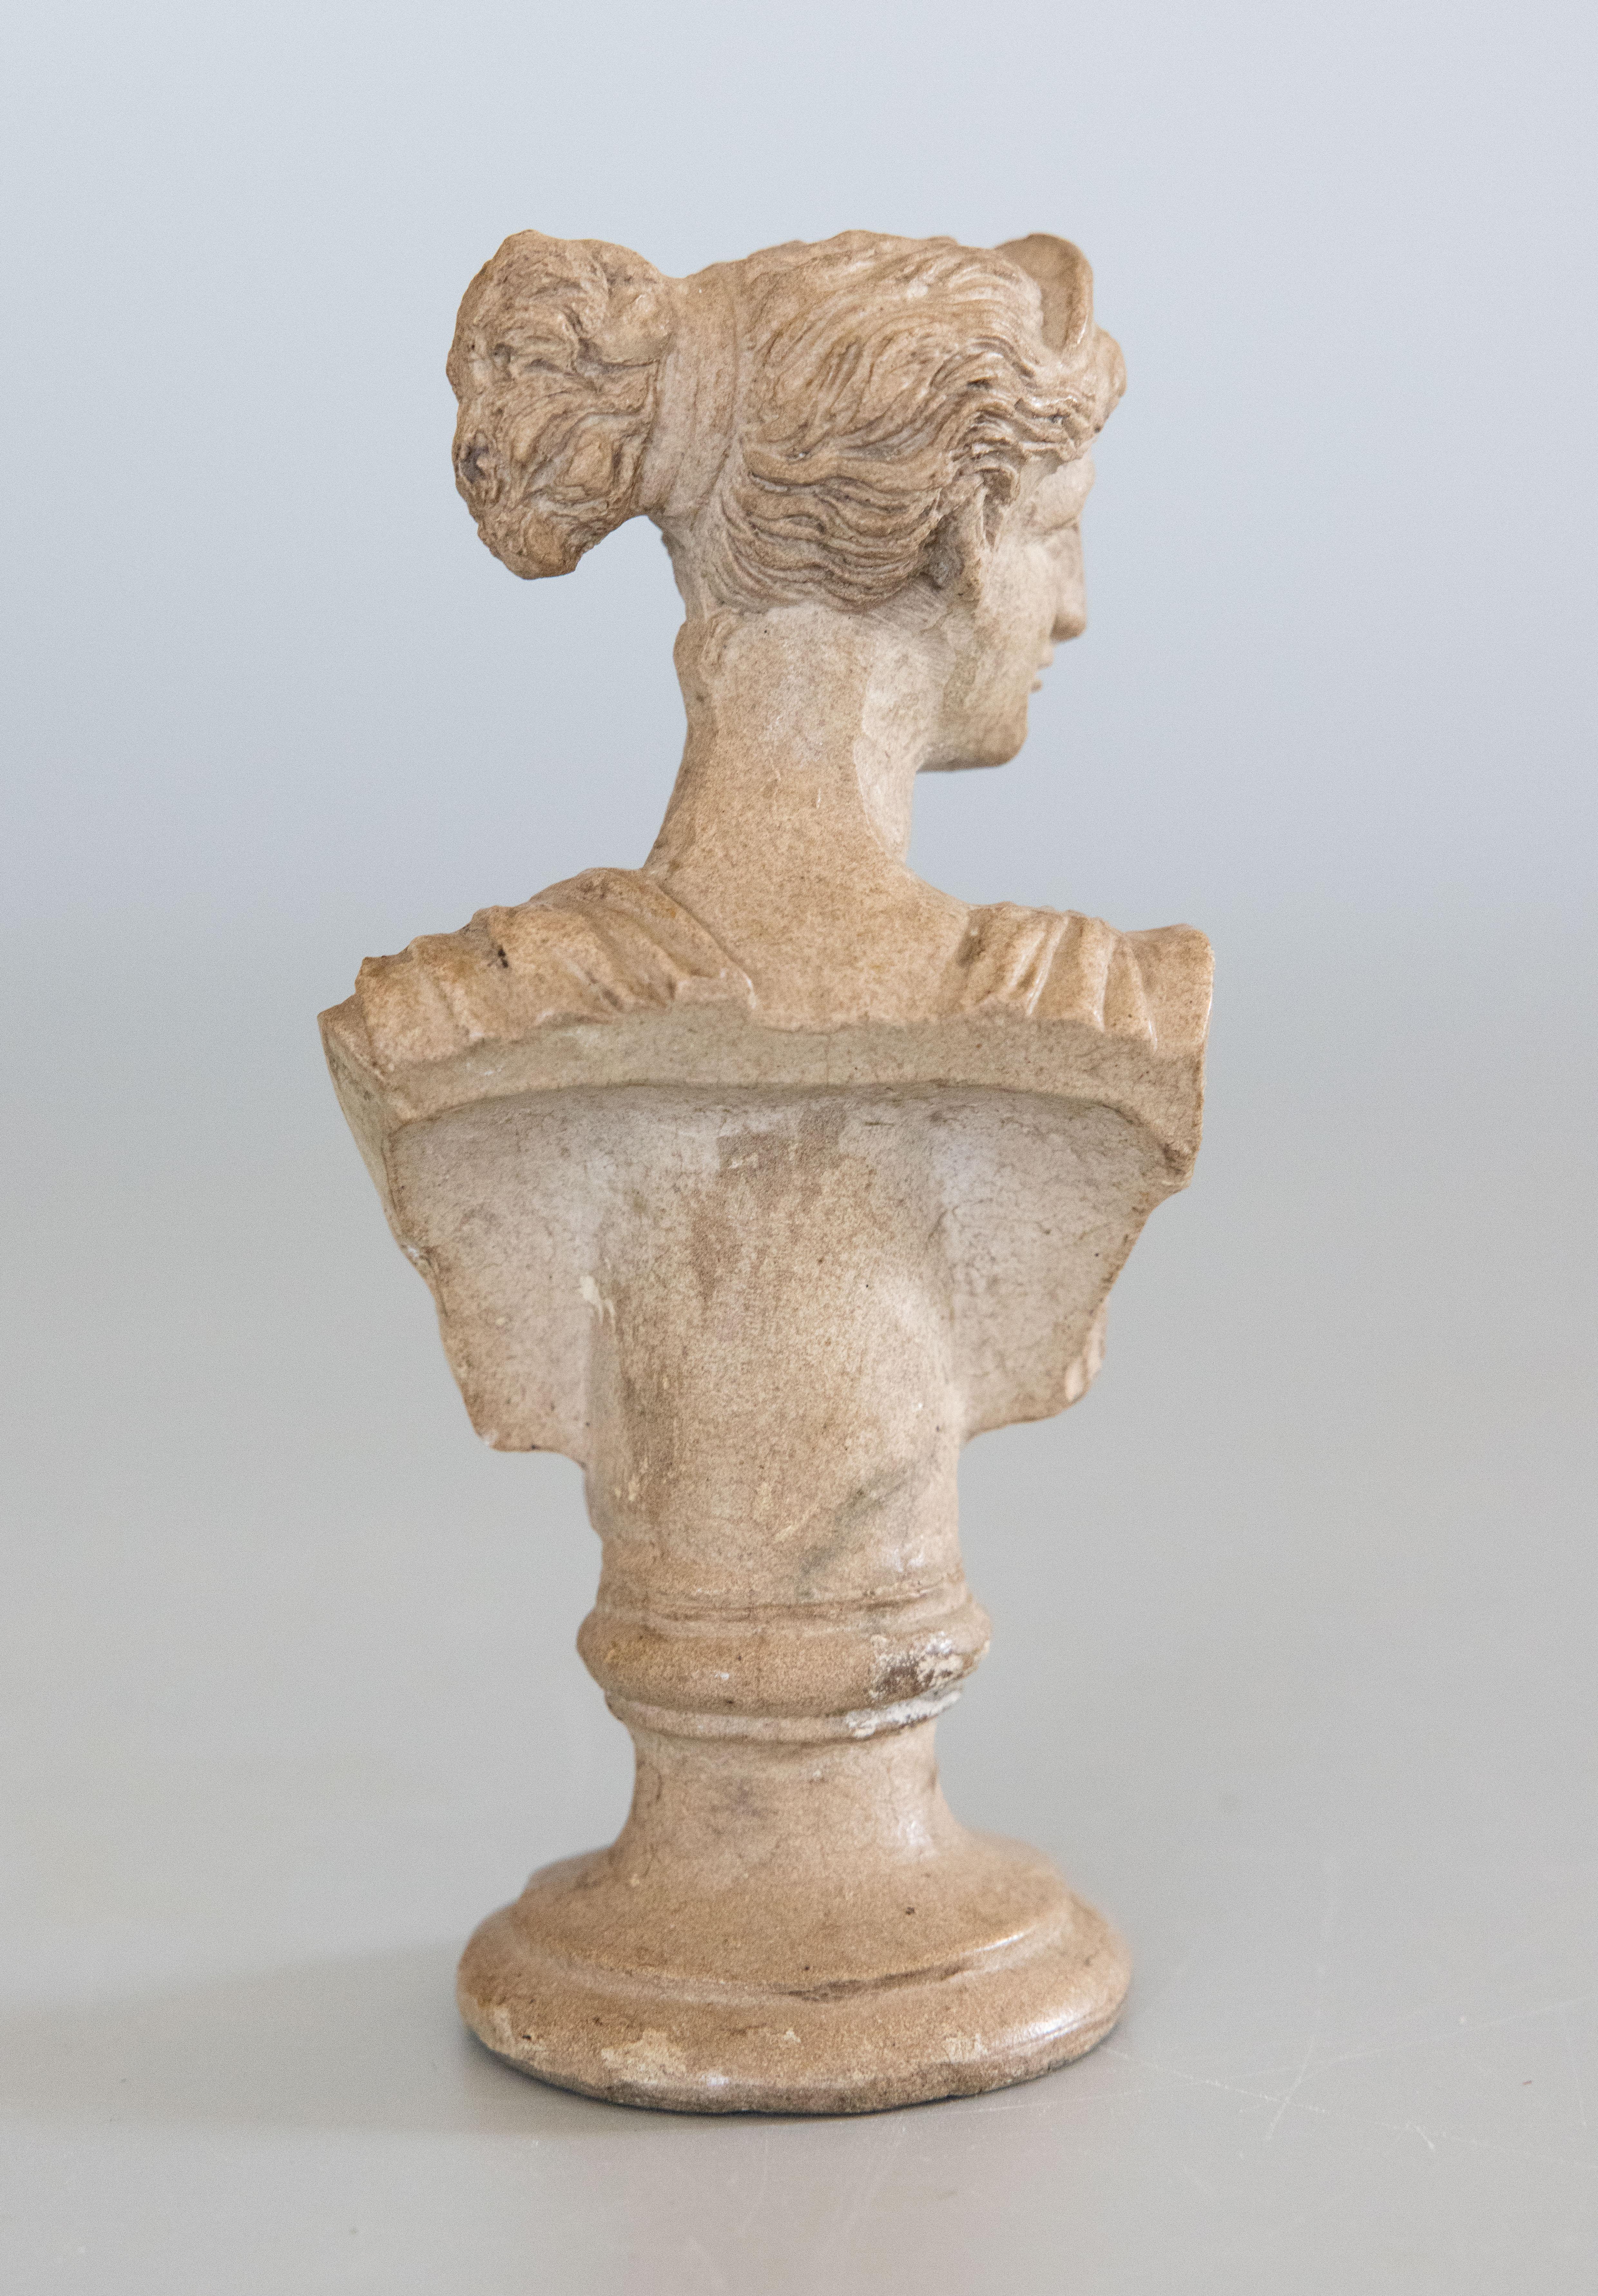 19th Century Petite Italian Grand Tour Souvenir Stone Bust of Diana of Versailles, c. 1880